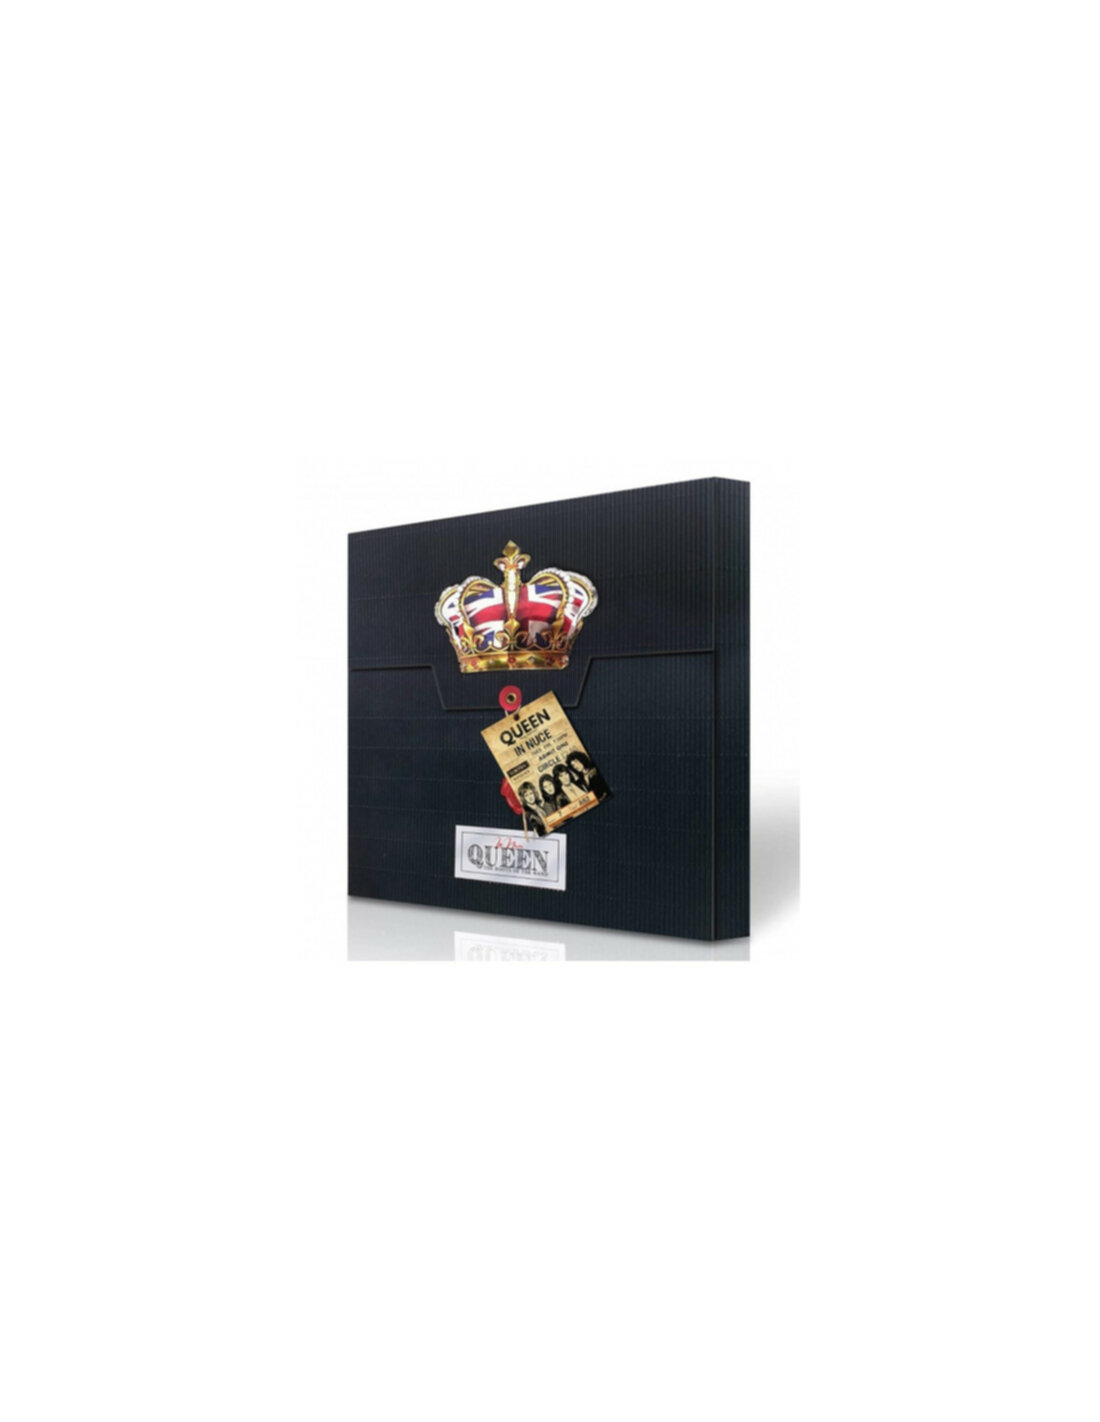 Queen In Nuce Vinile Bianco (Limited Edt.) - Queen - LP